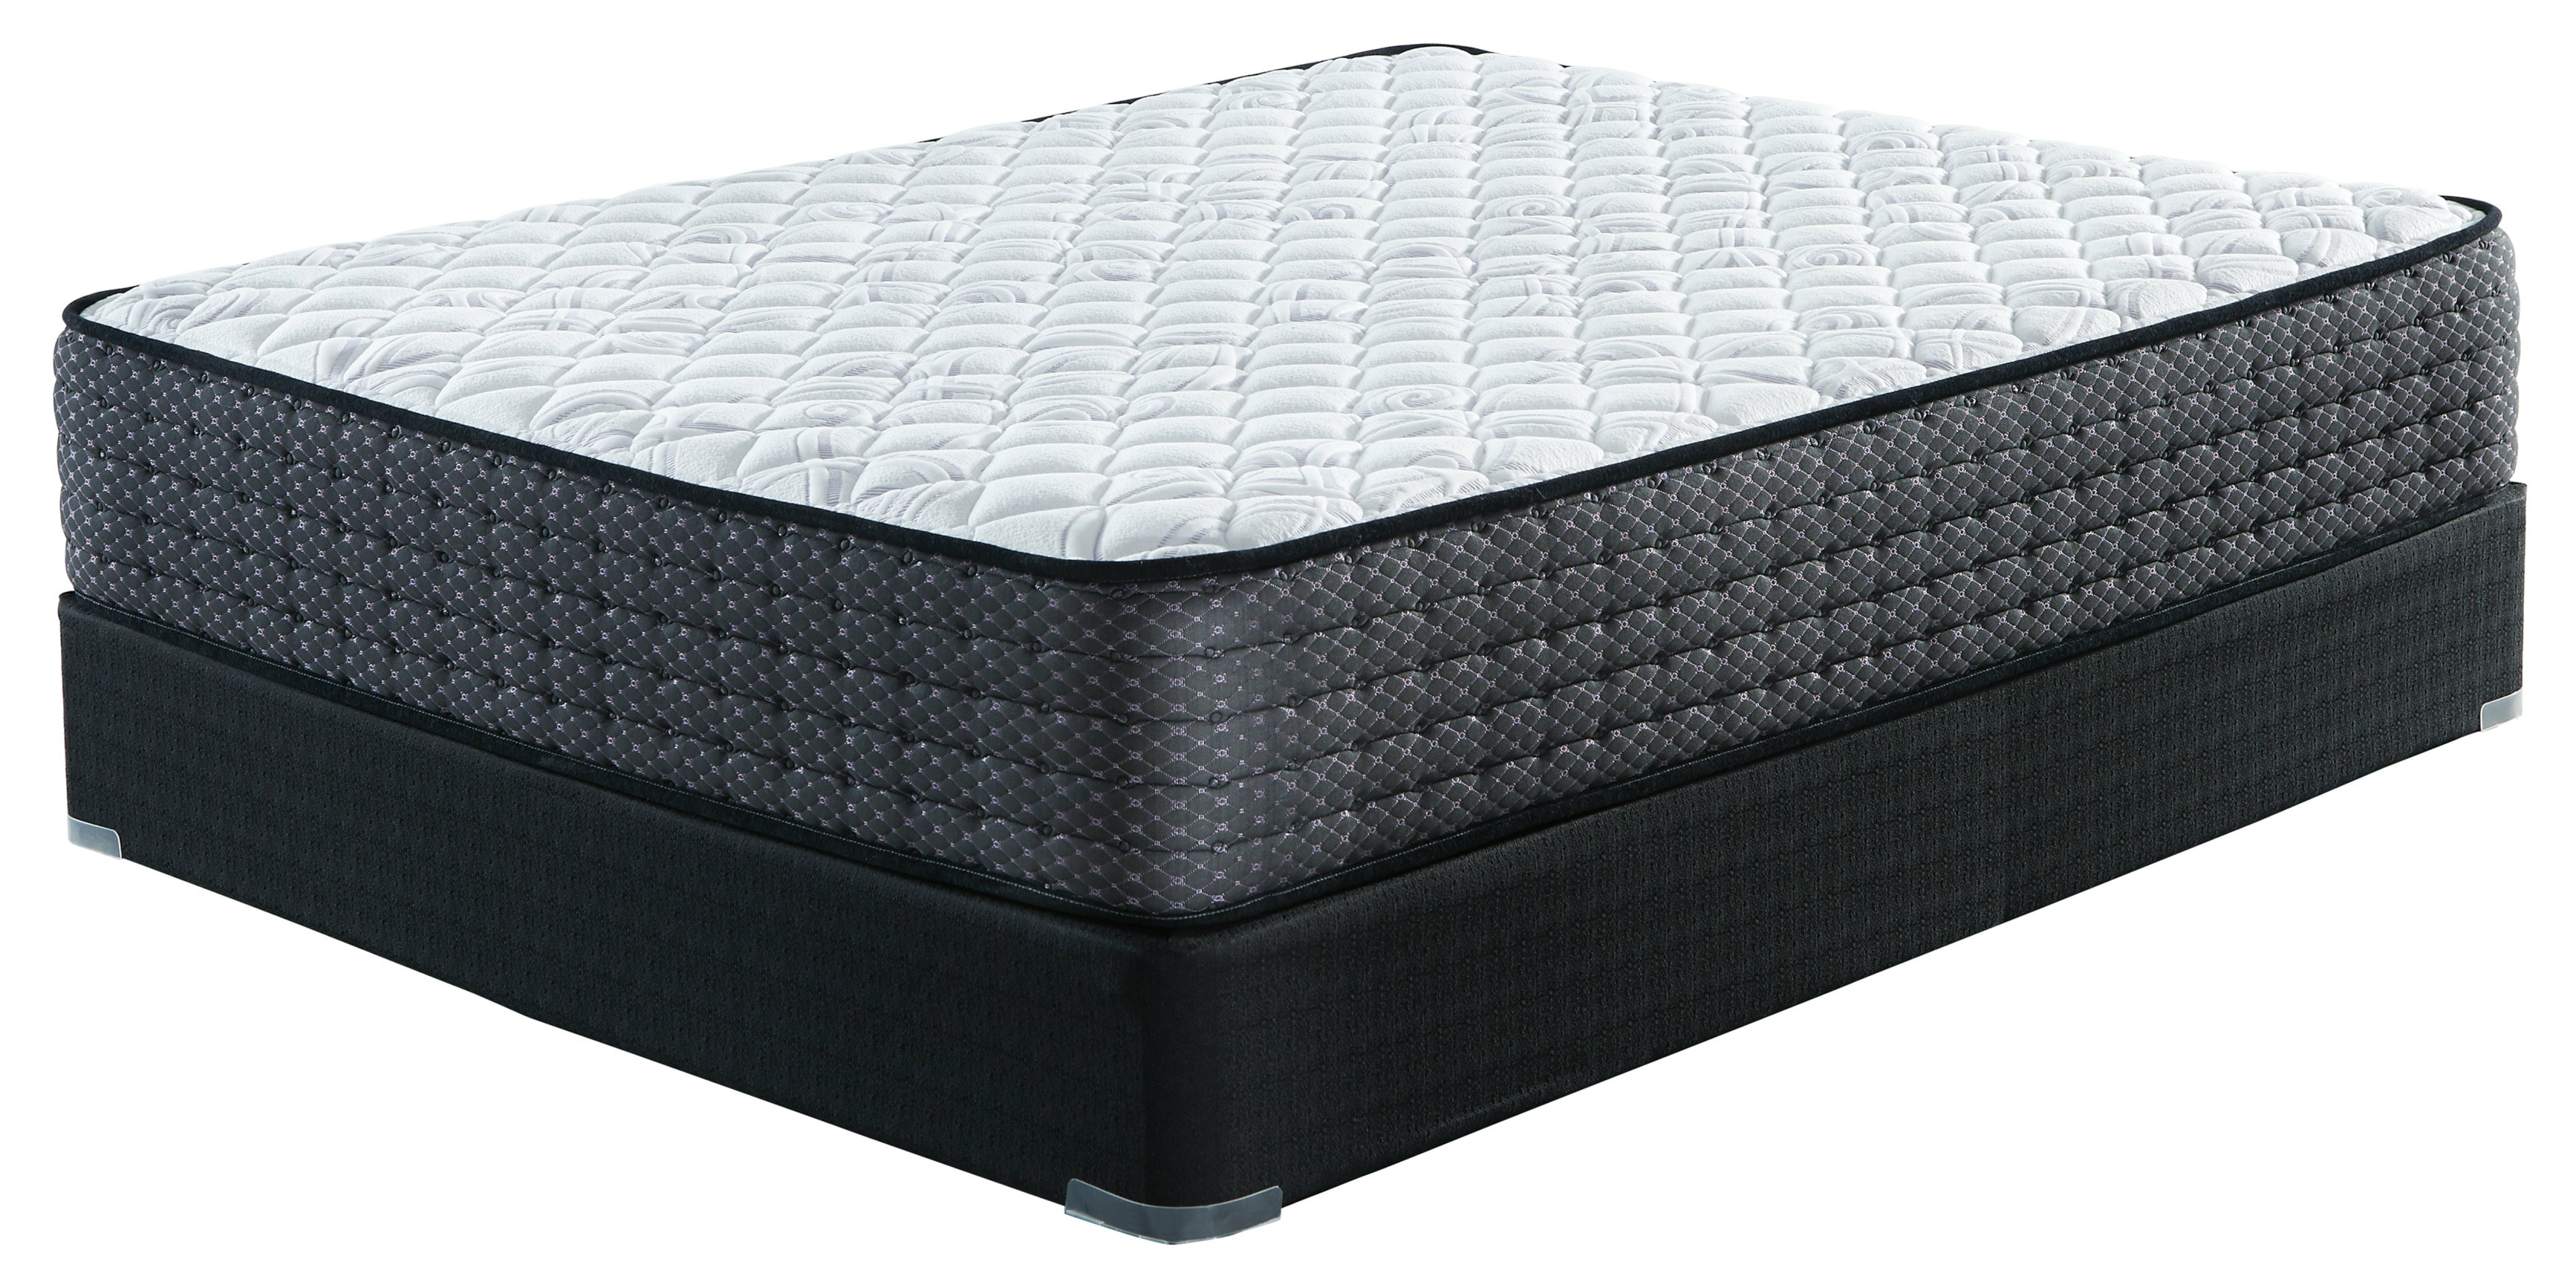 sierra sleep plush mattress description